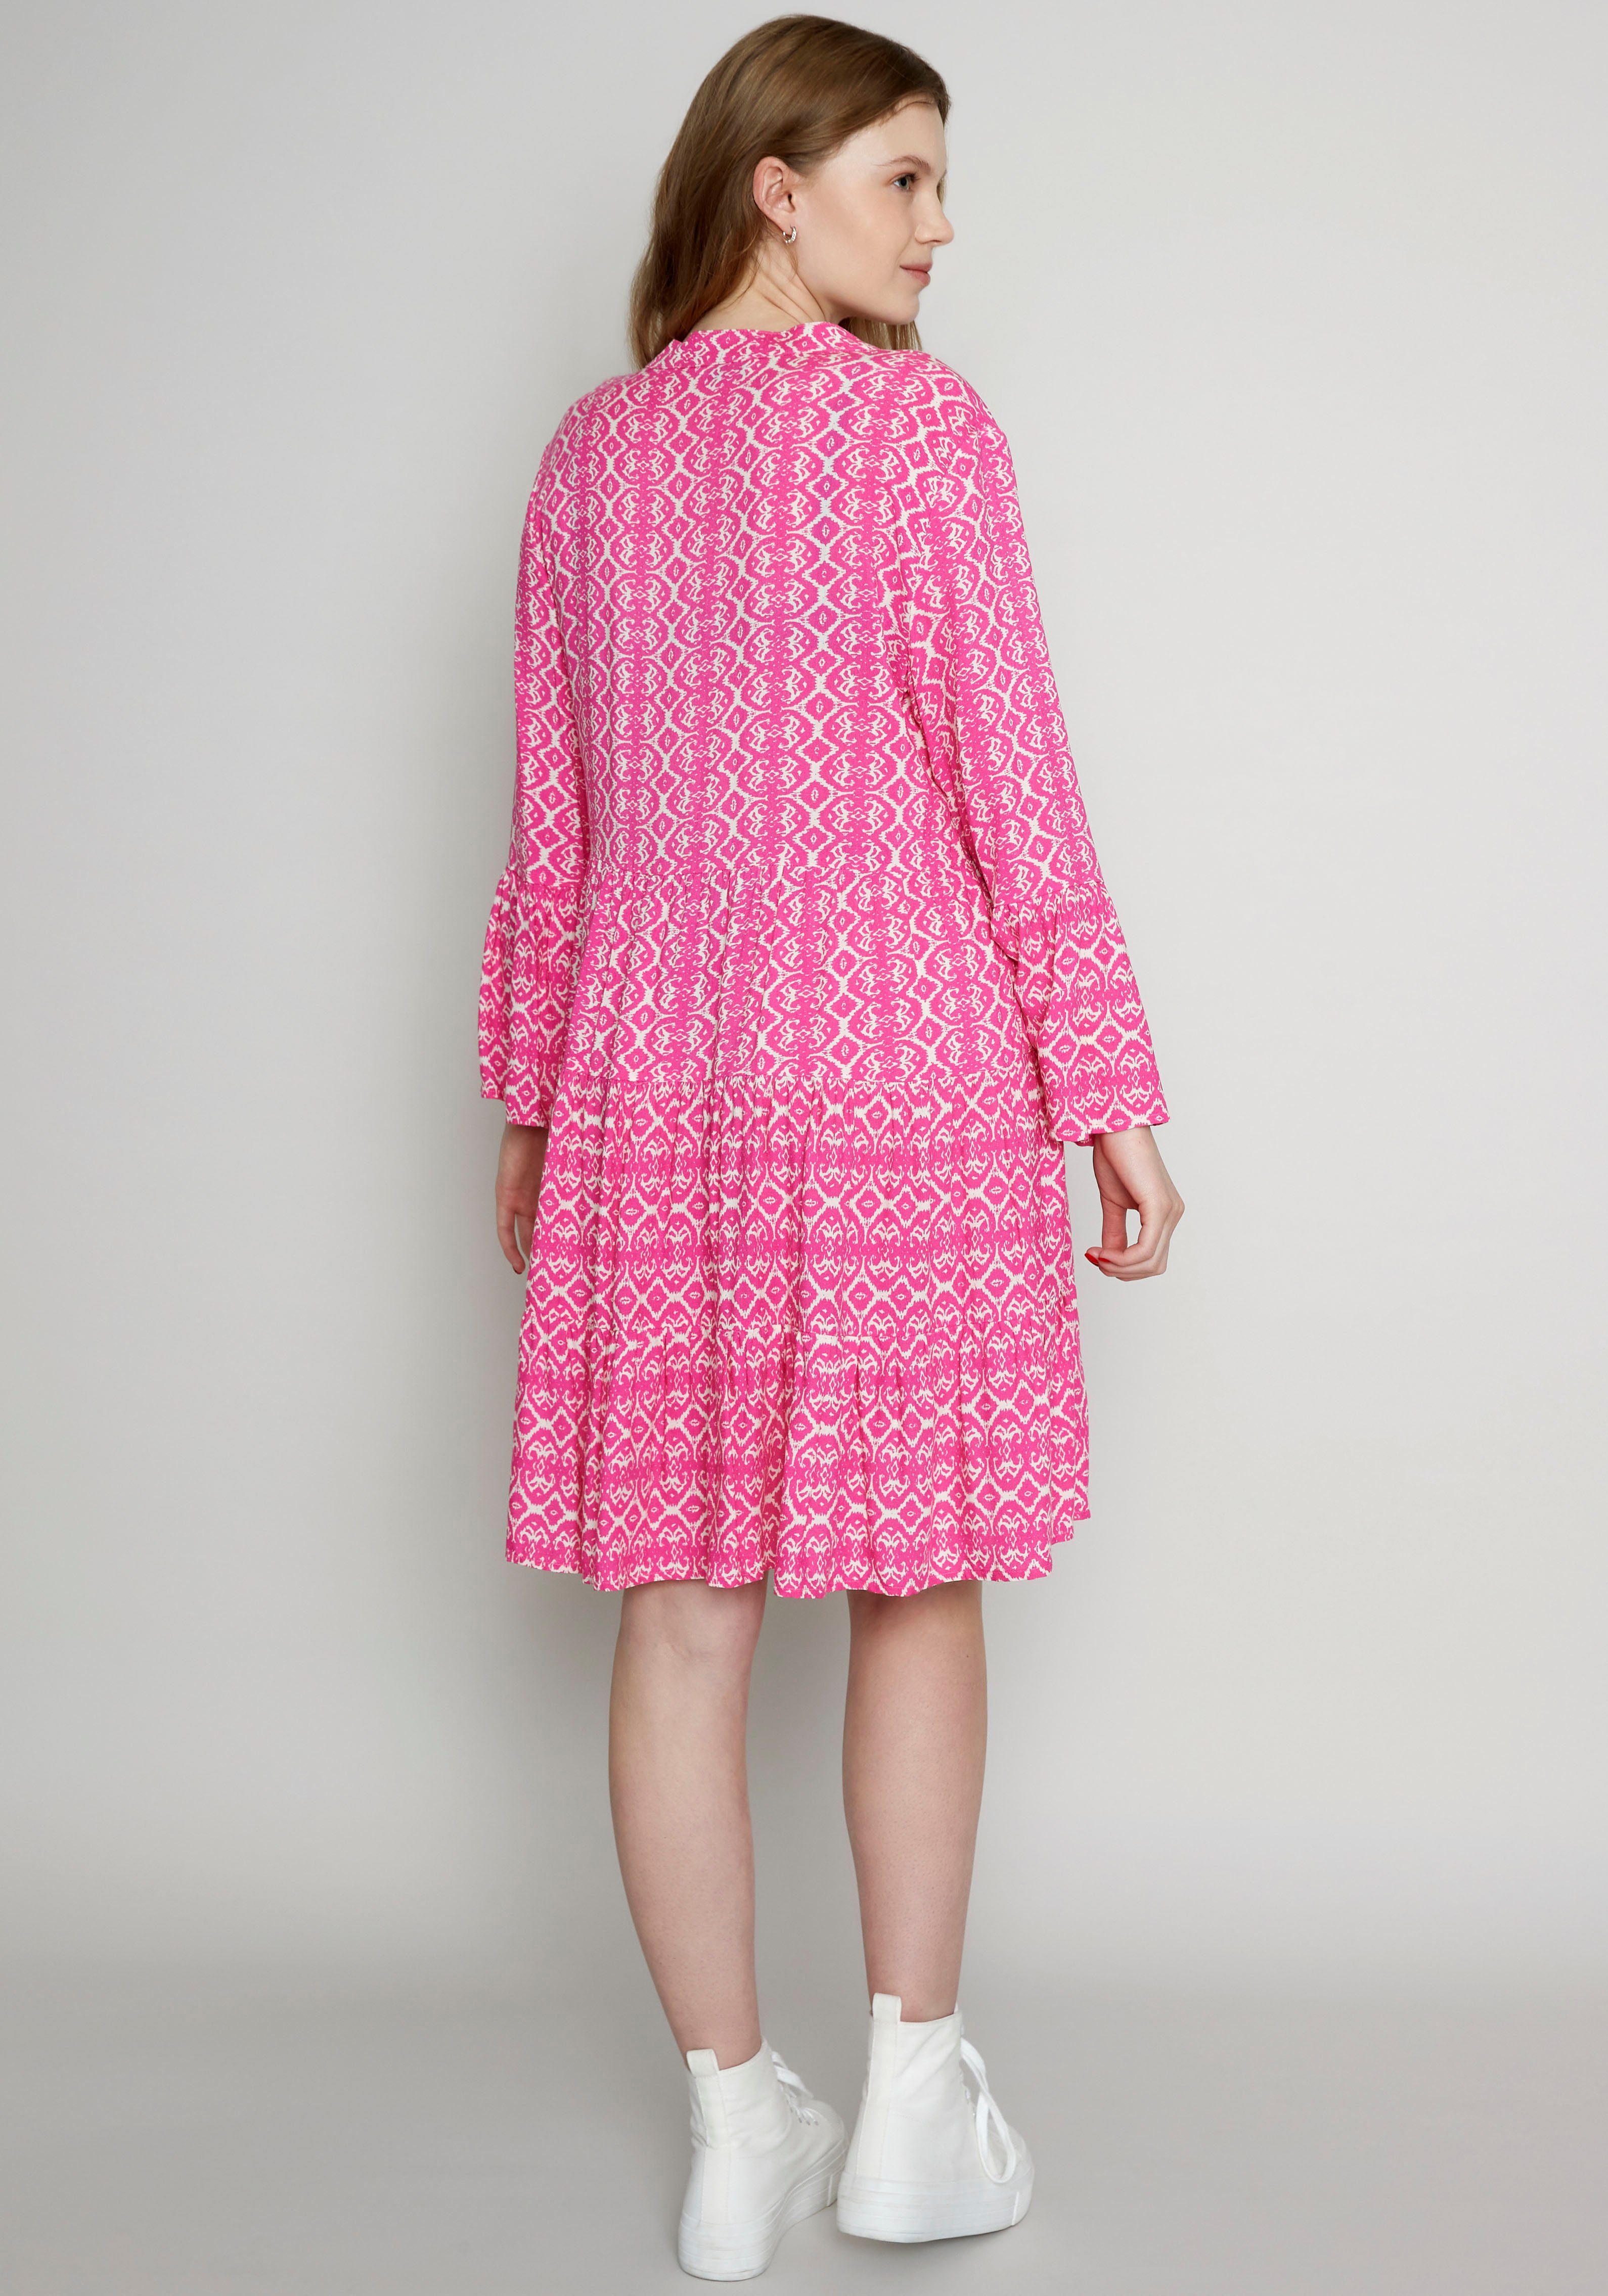 Dress Style Sommerkleid im mit Me44lika ZABAIONE Pink Tunika Volant